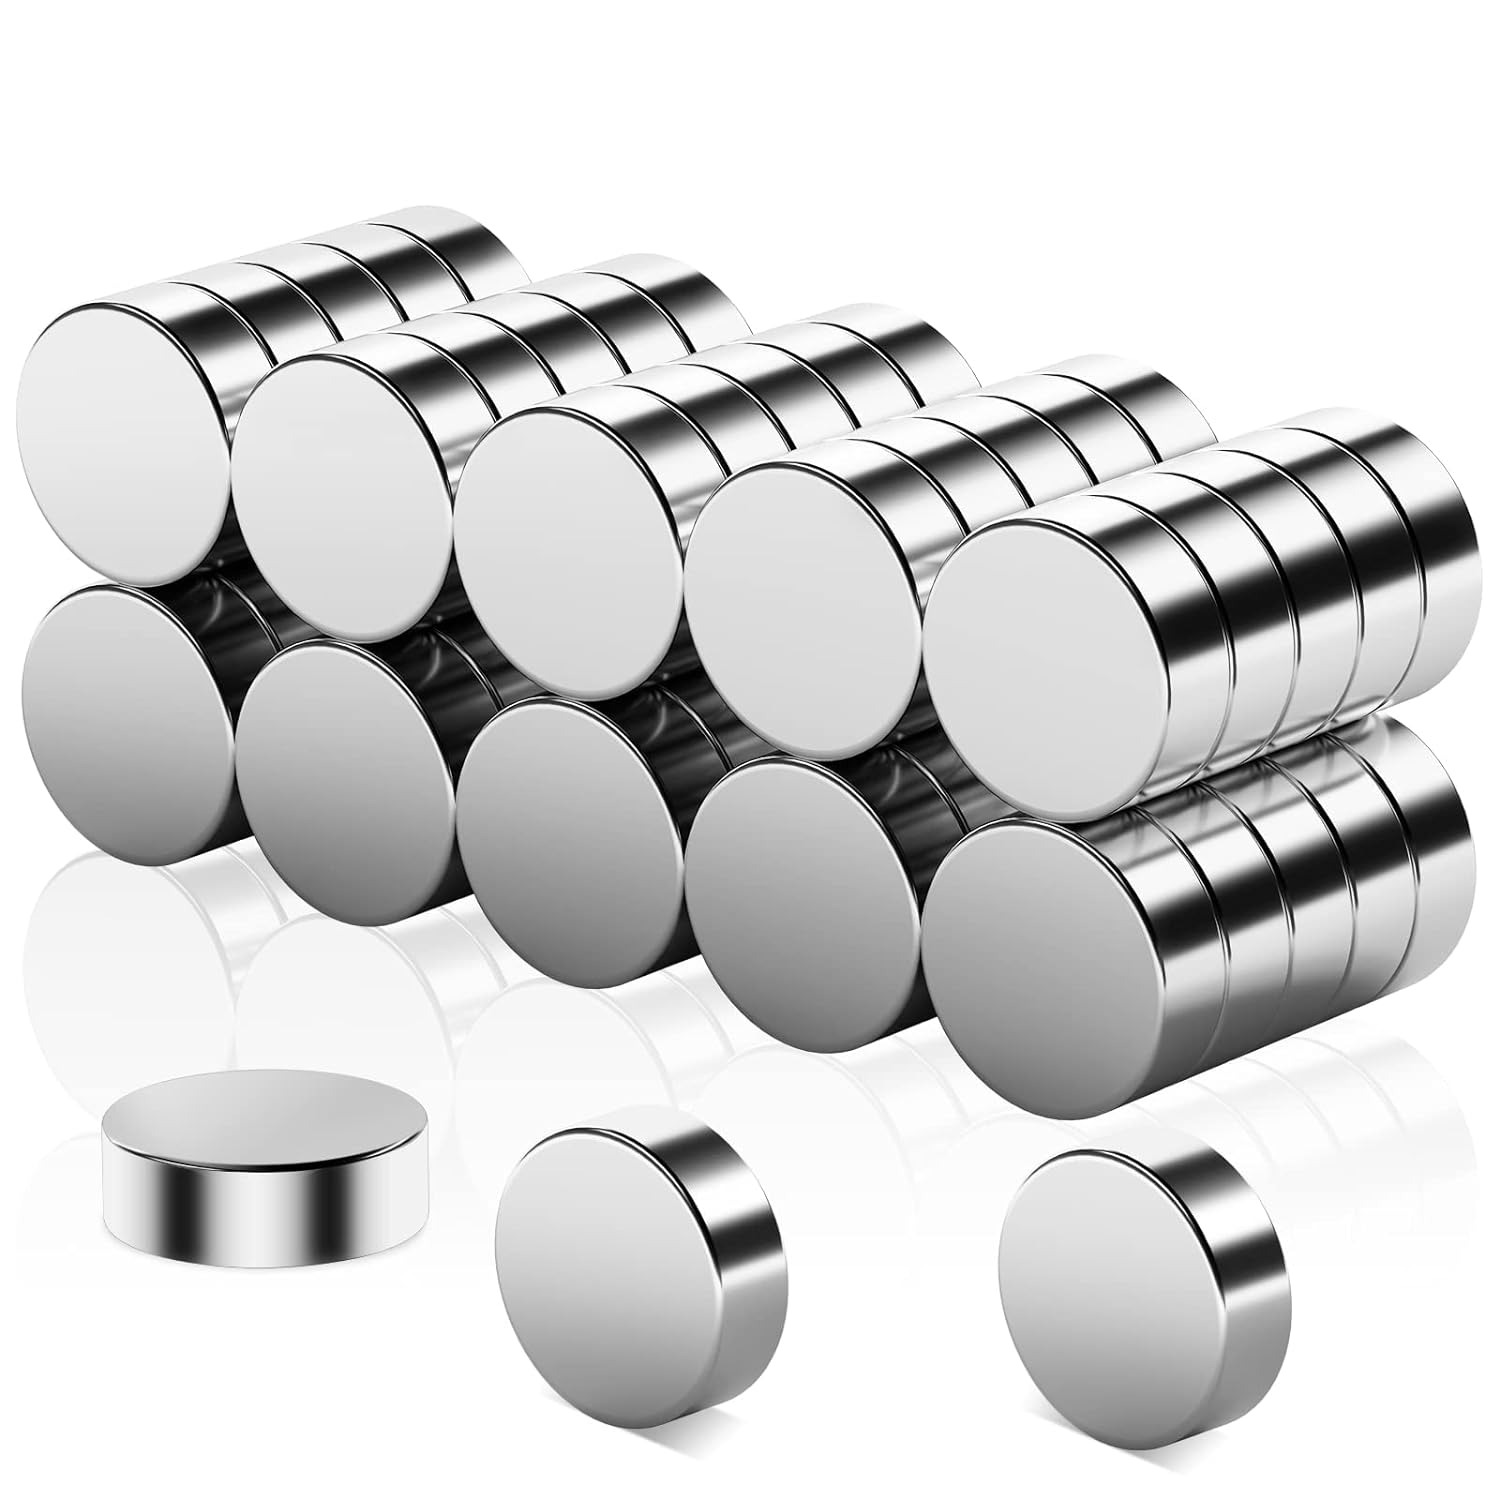 50 Pcs Fridge Magnets 6x2mm Refrigerator Magnets Magnets for Fridge & Crafts NEW